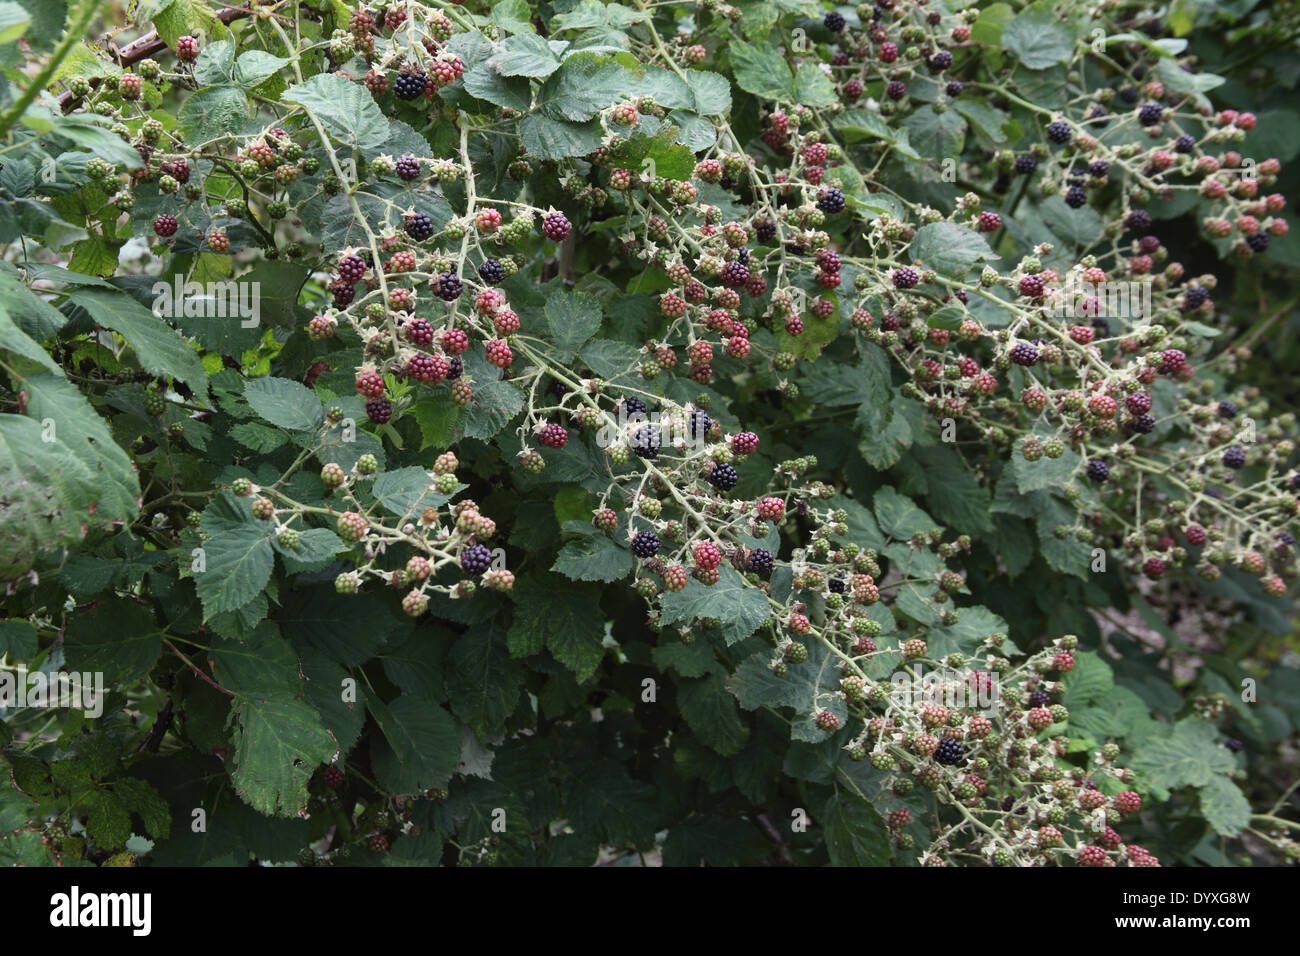 Rubus fruticosus 'Himalayan Giant' Blackberry fruit ripening on bush Stock Photo